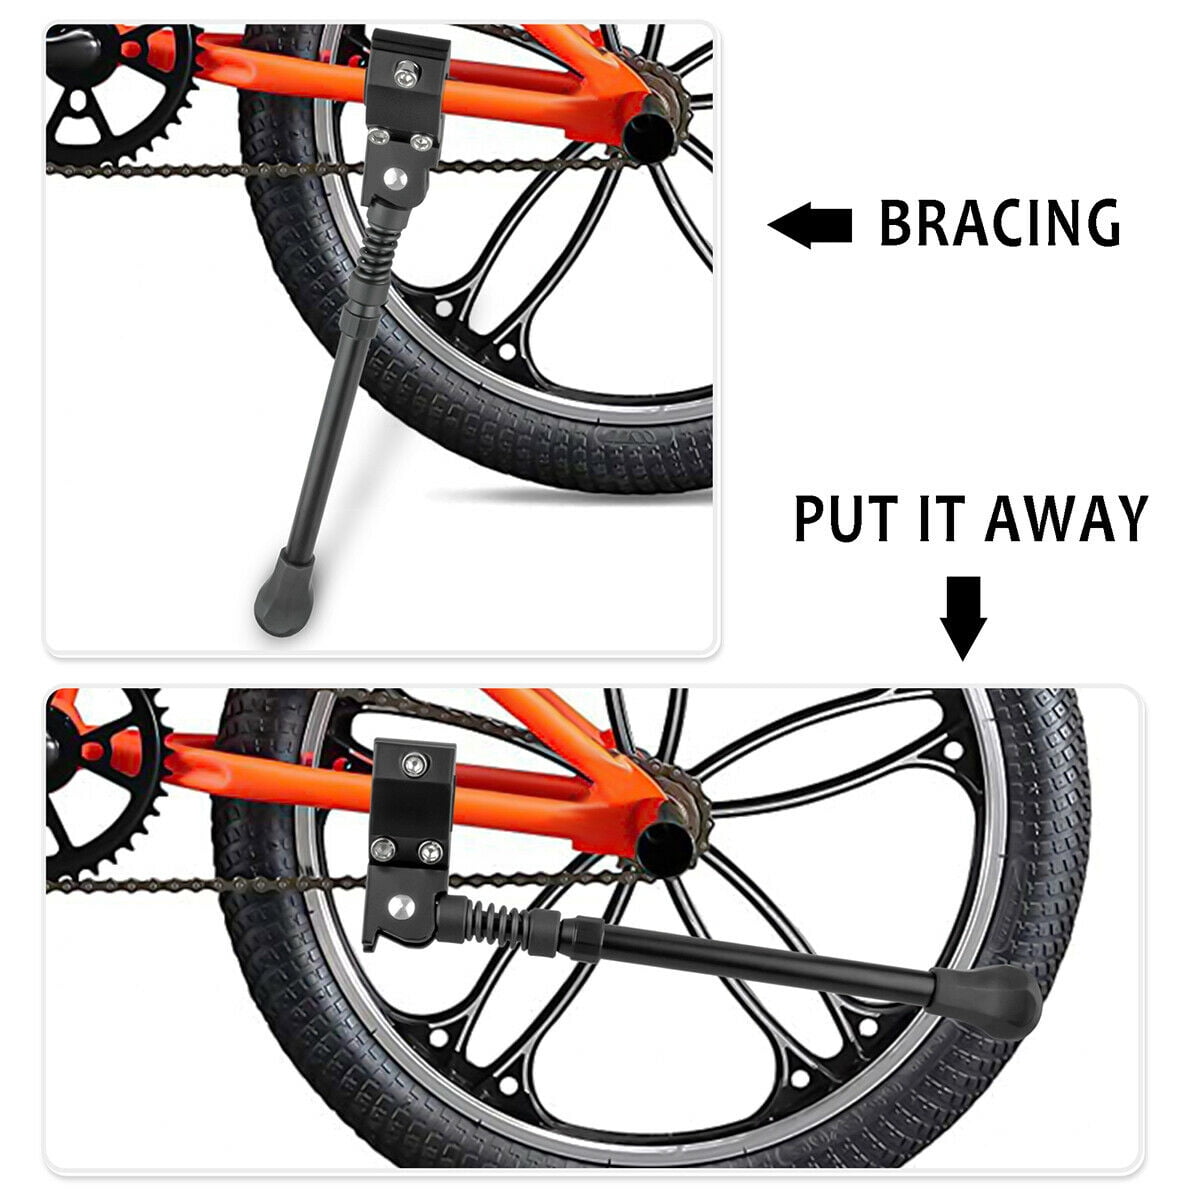 Bicycle Kick Stand Adjustable Universal Fit for 24 26 27.5 29 tire Bike Kickstand